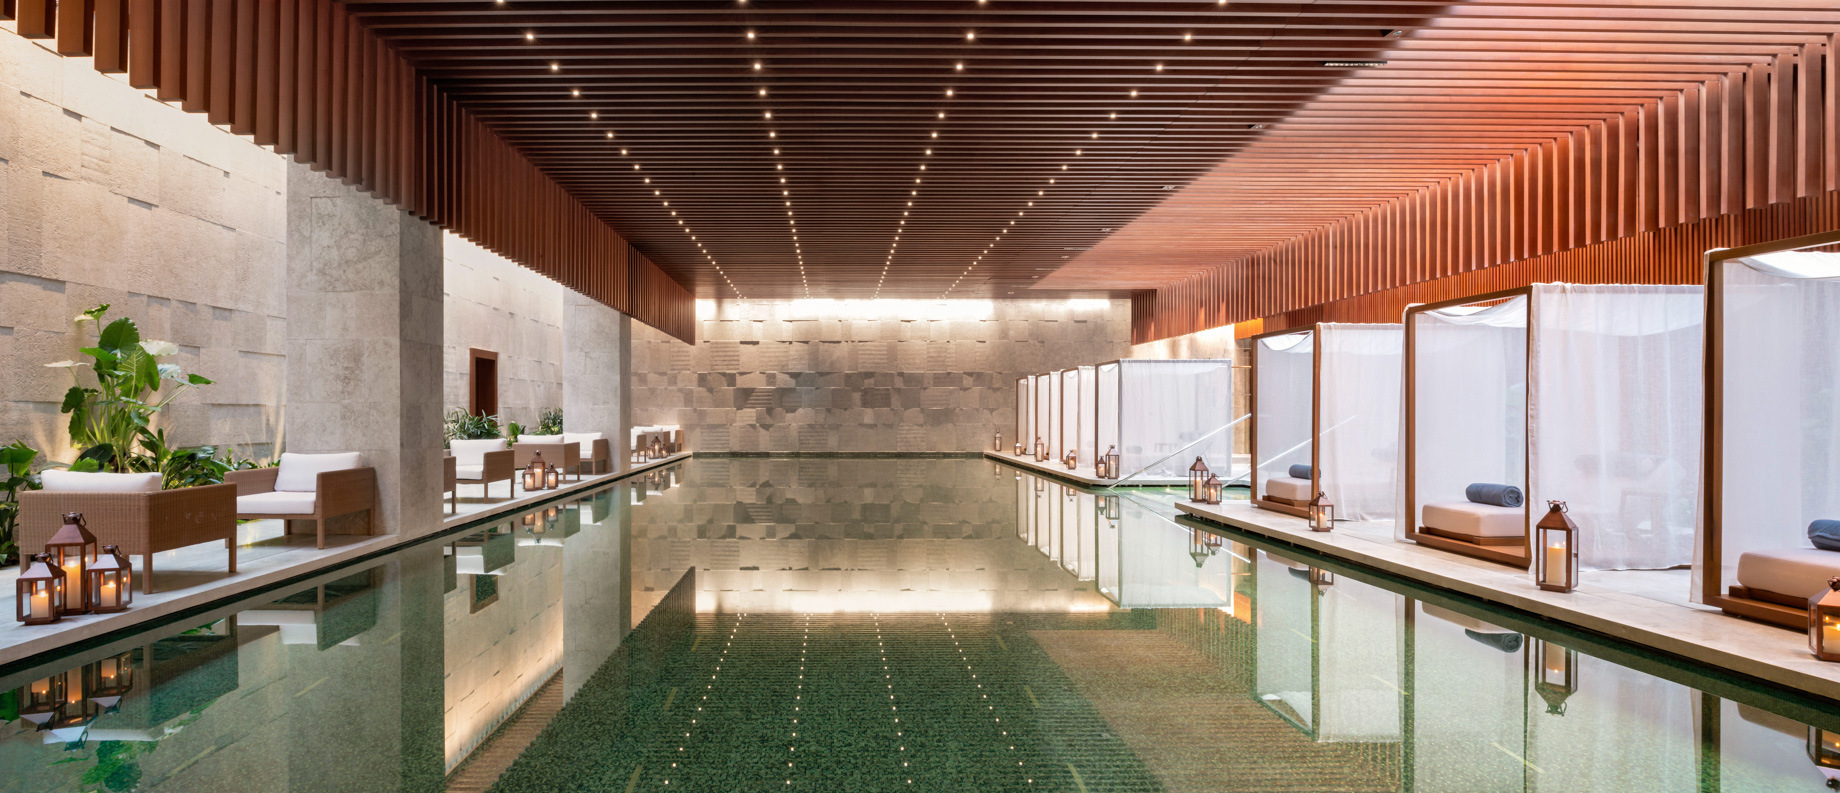 Bvlgari Hotel Shanghai - Shanghai, China - BVLGARI Spa Pool